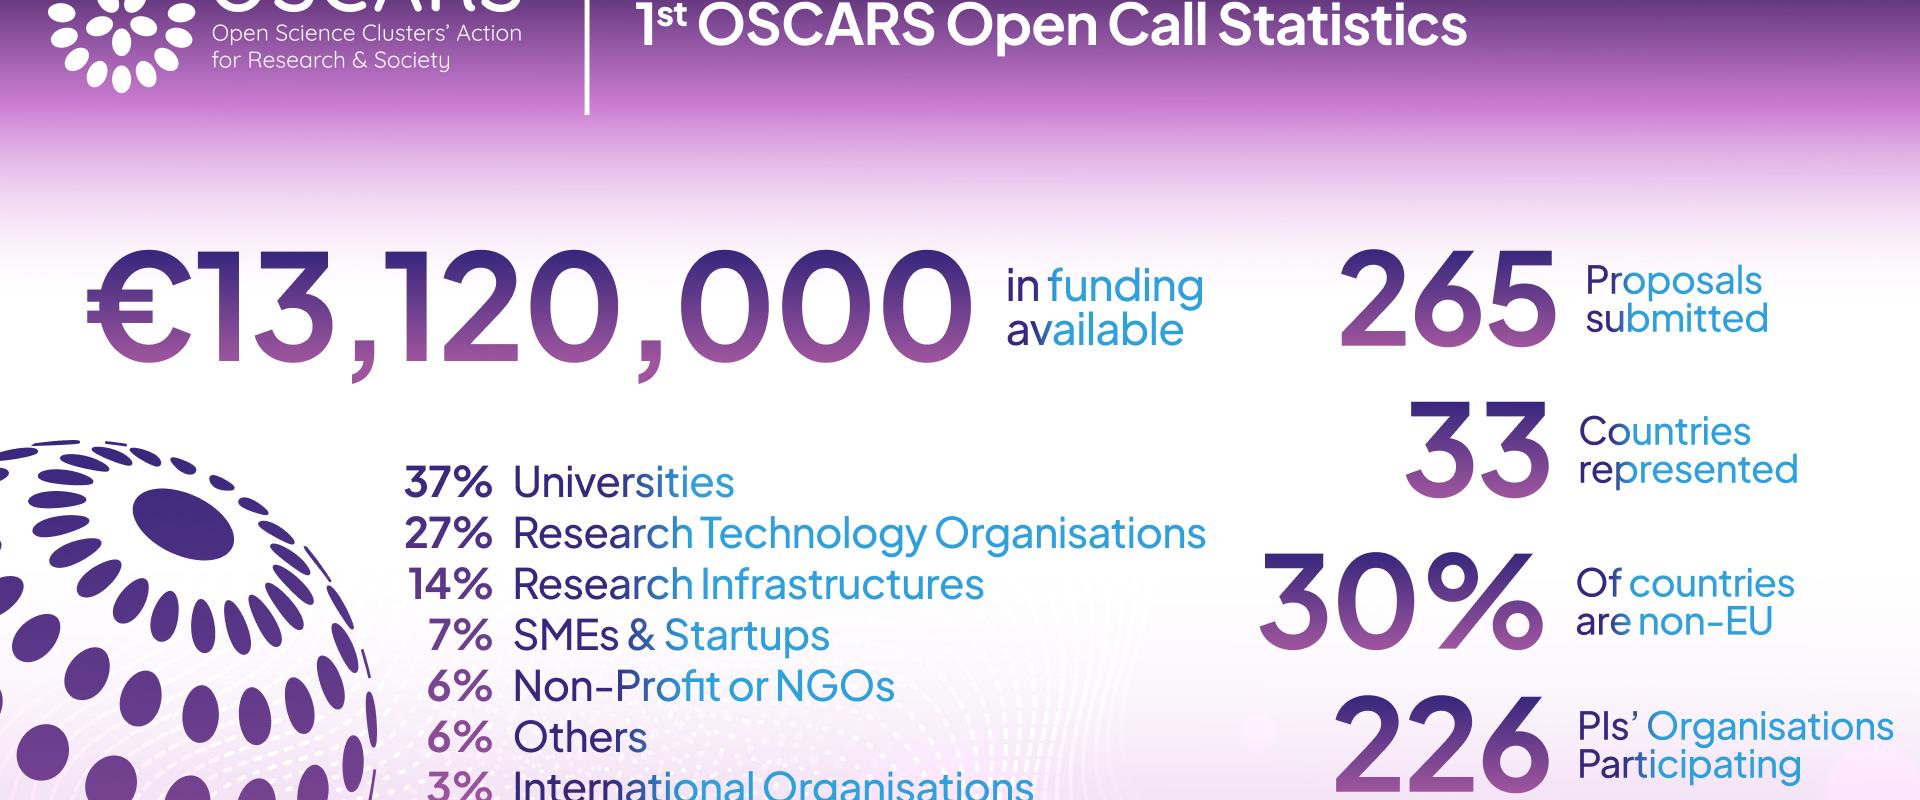 OSCARS 1st Open Call - Statistics